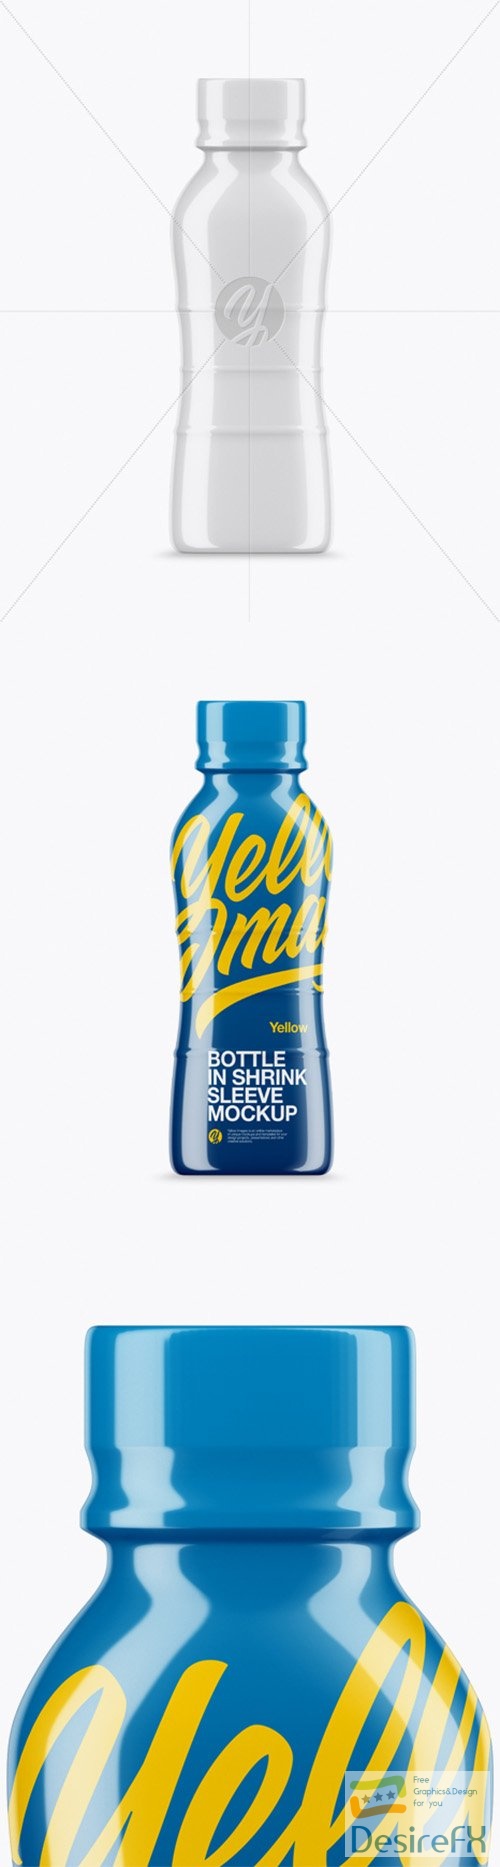 Bottle In Glossy Shrink Sleeve Mockup 20013 TIF